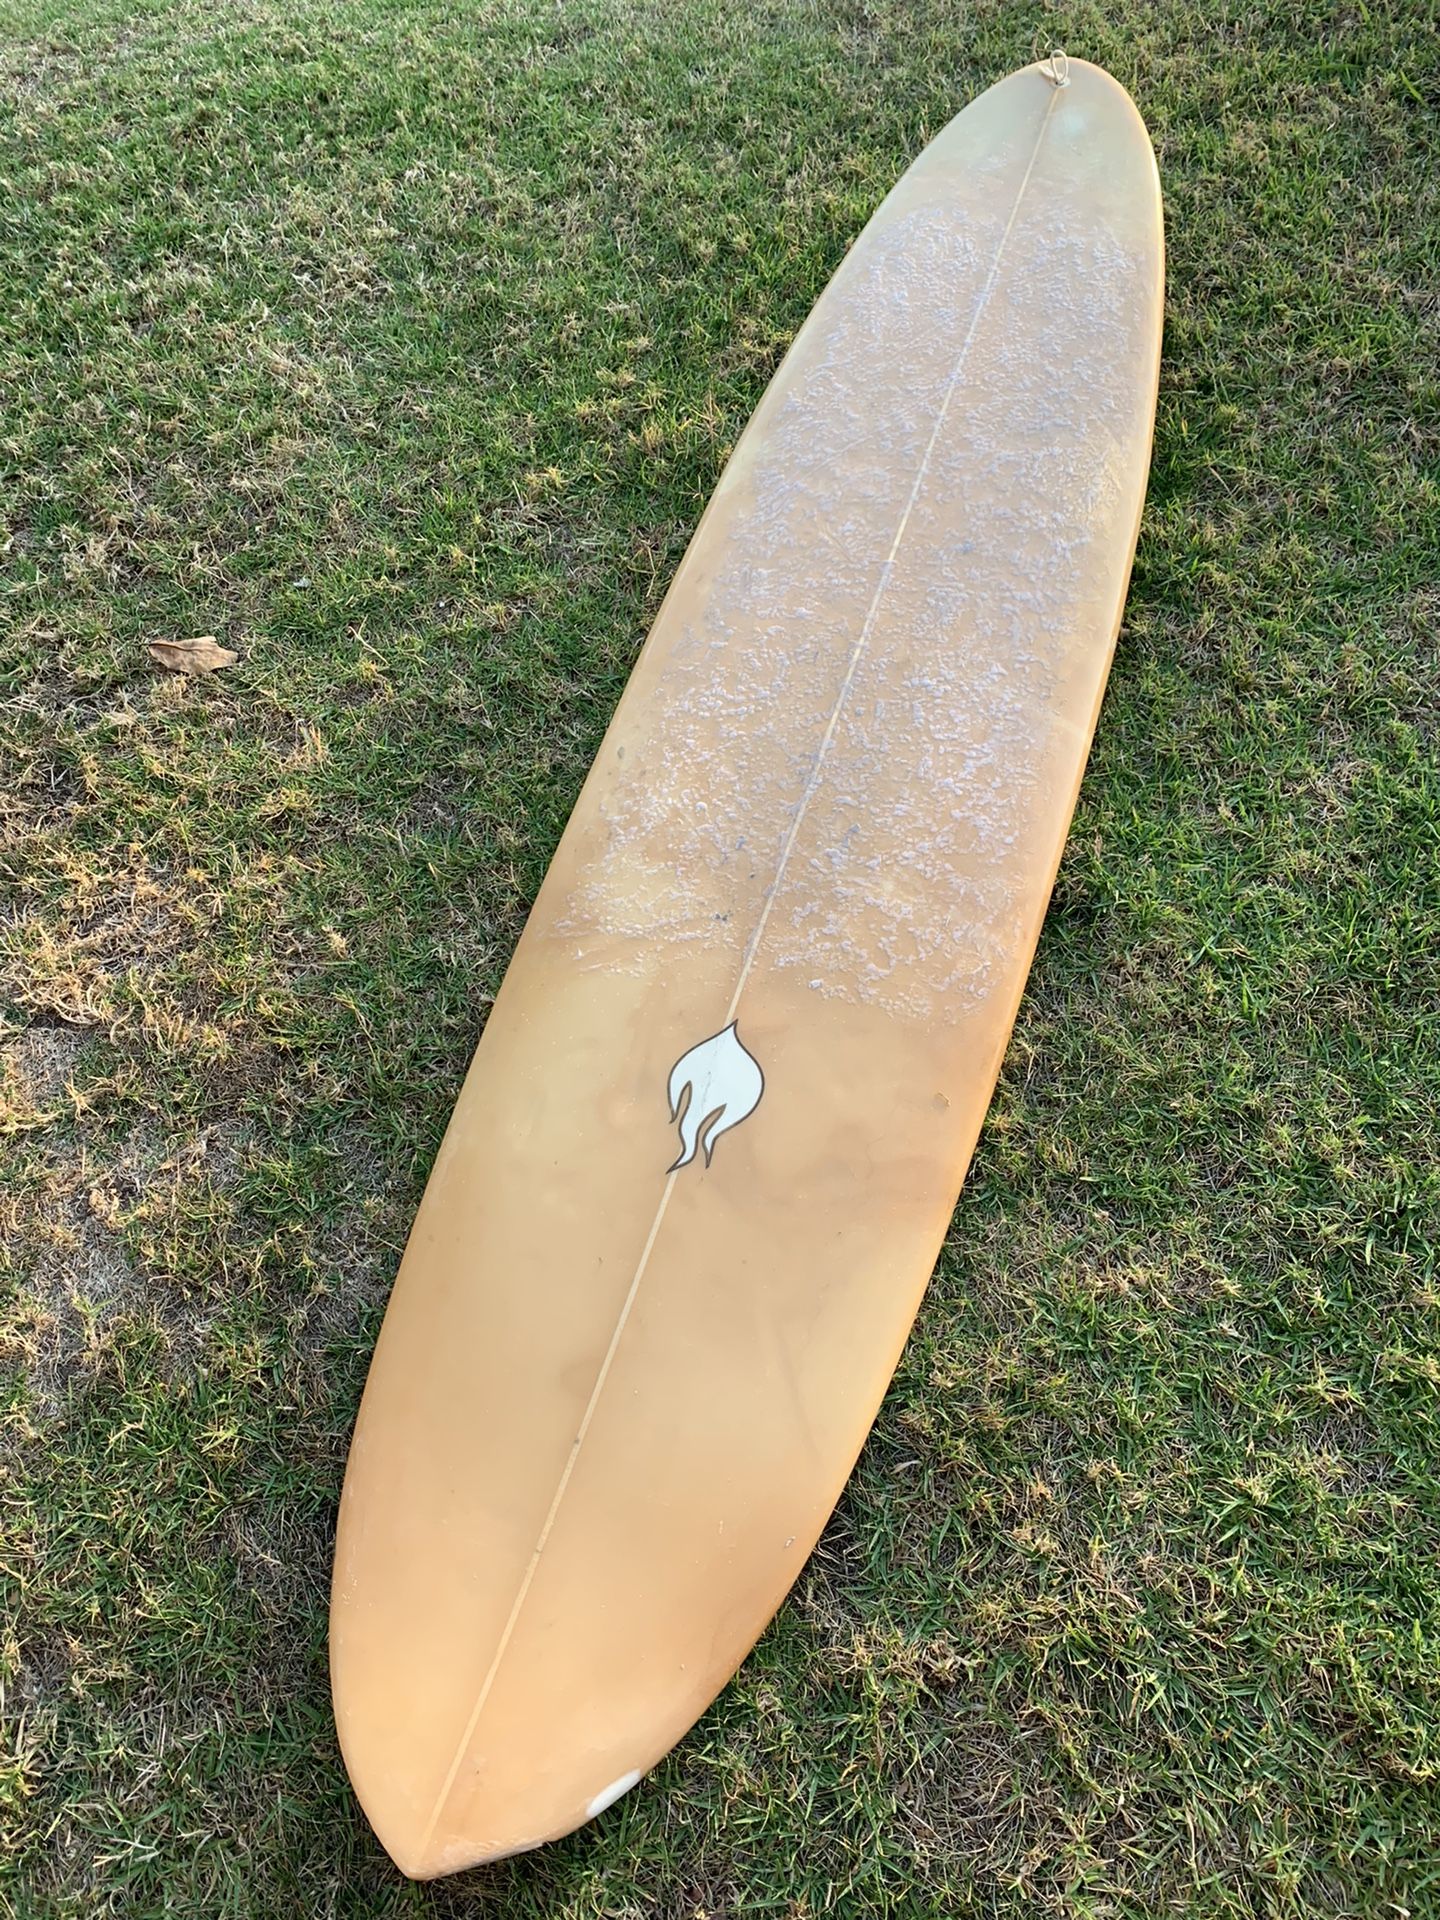 7’10 surfboard